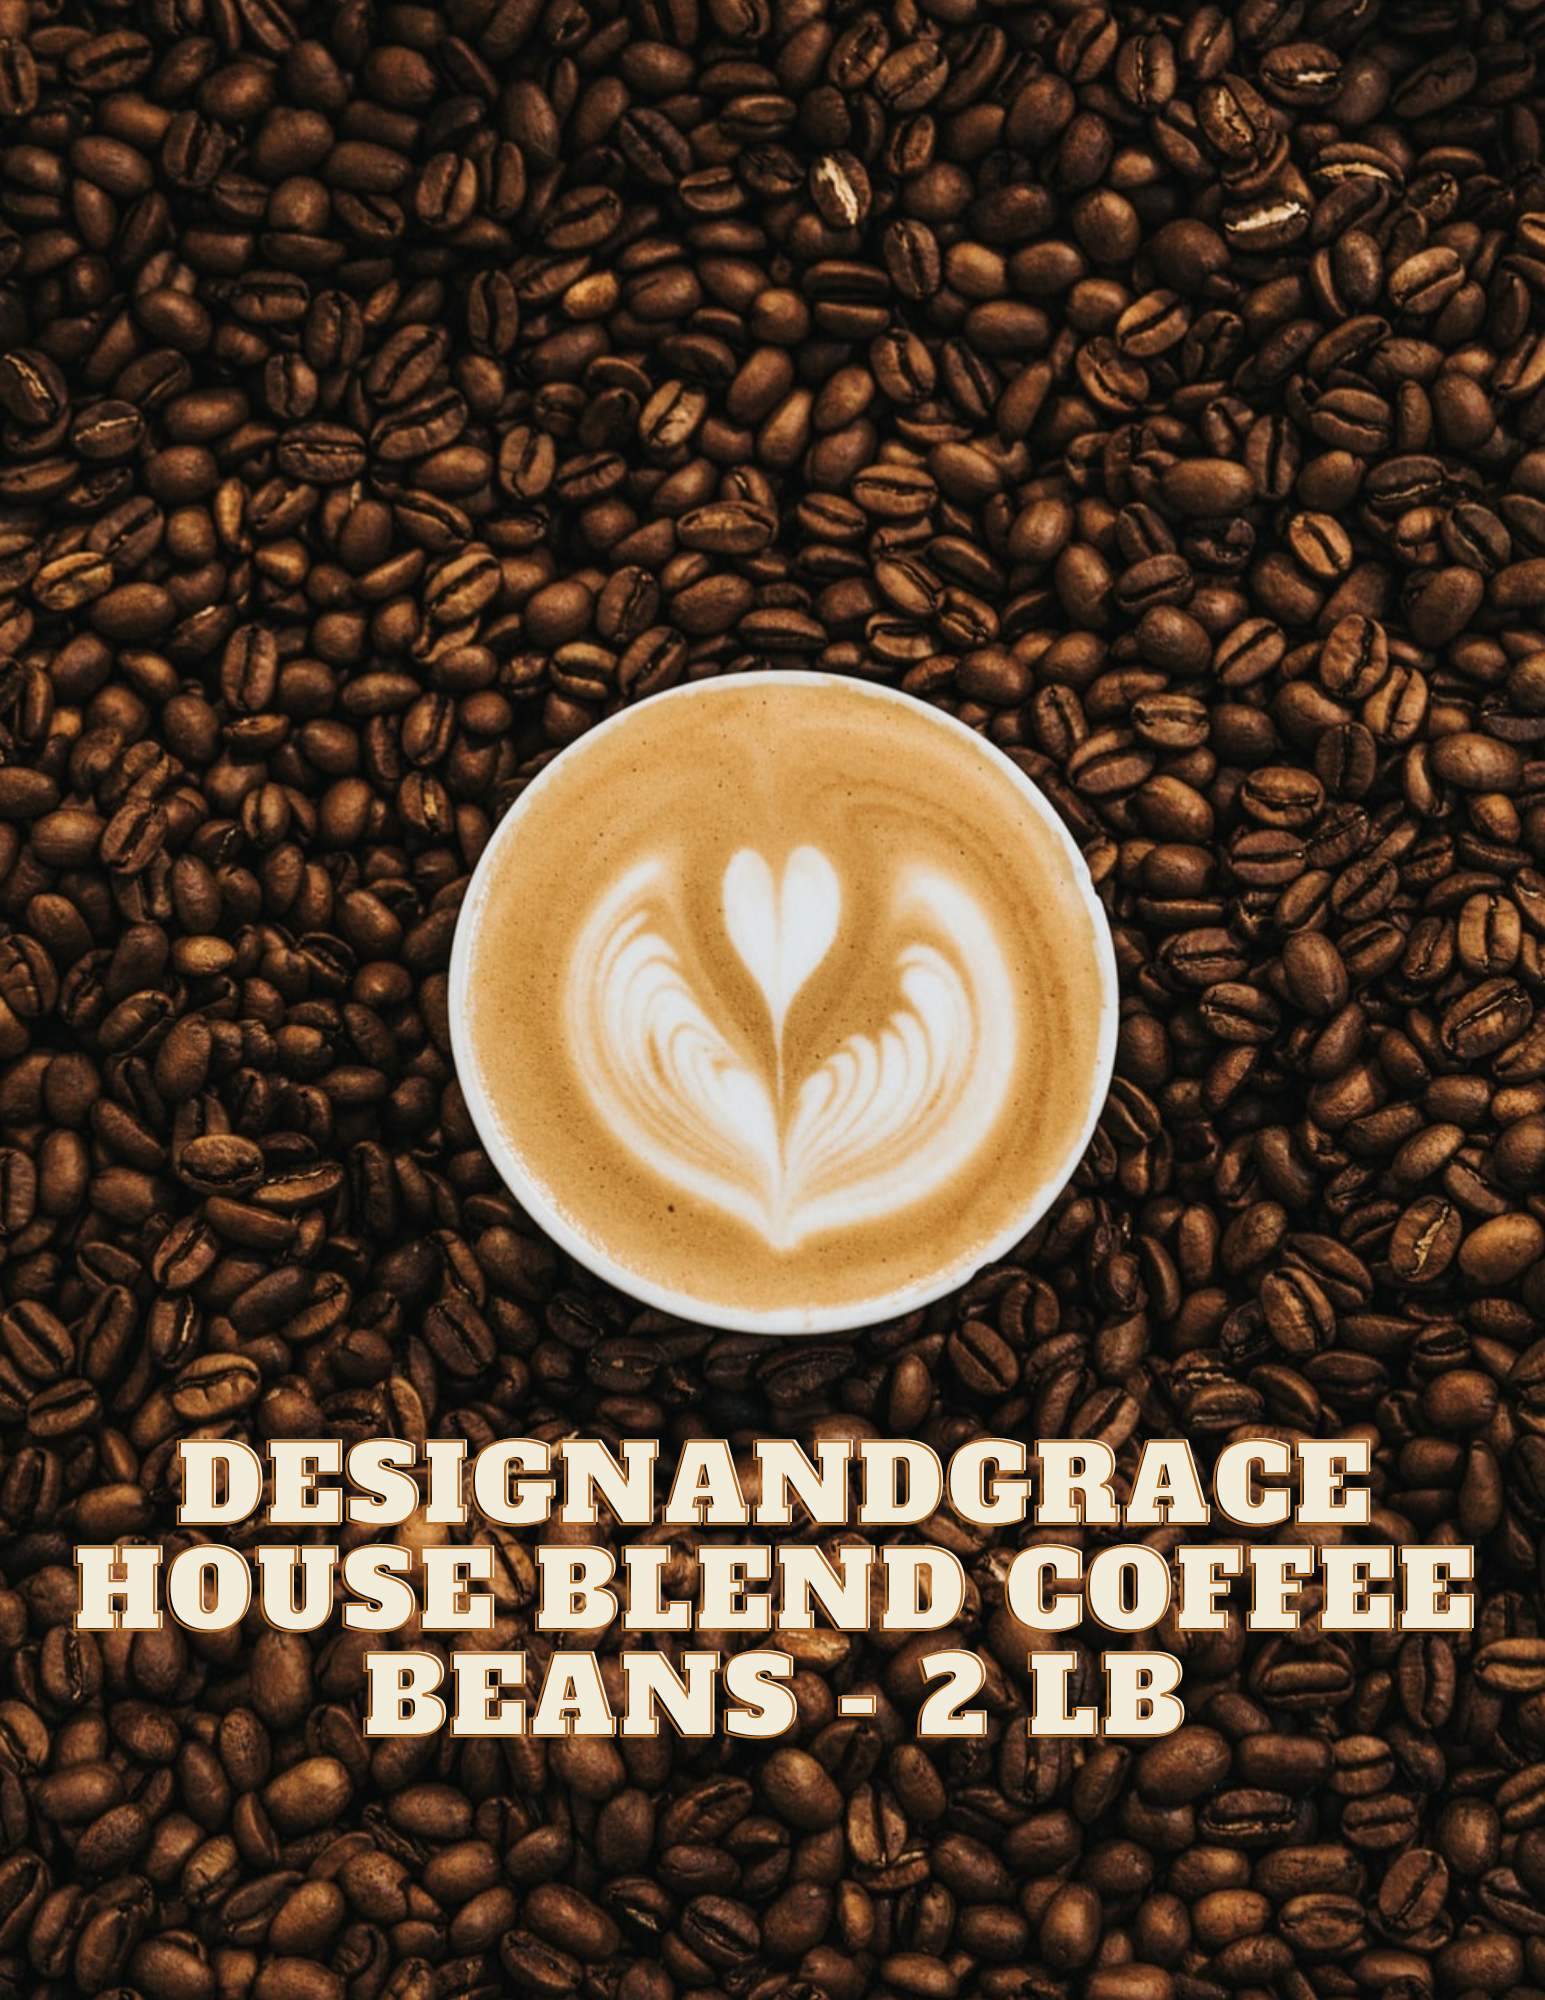 DesignandGrace House Blend Coffee Beans - 2 lb